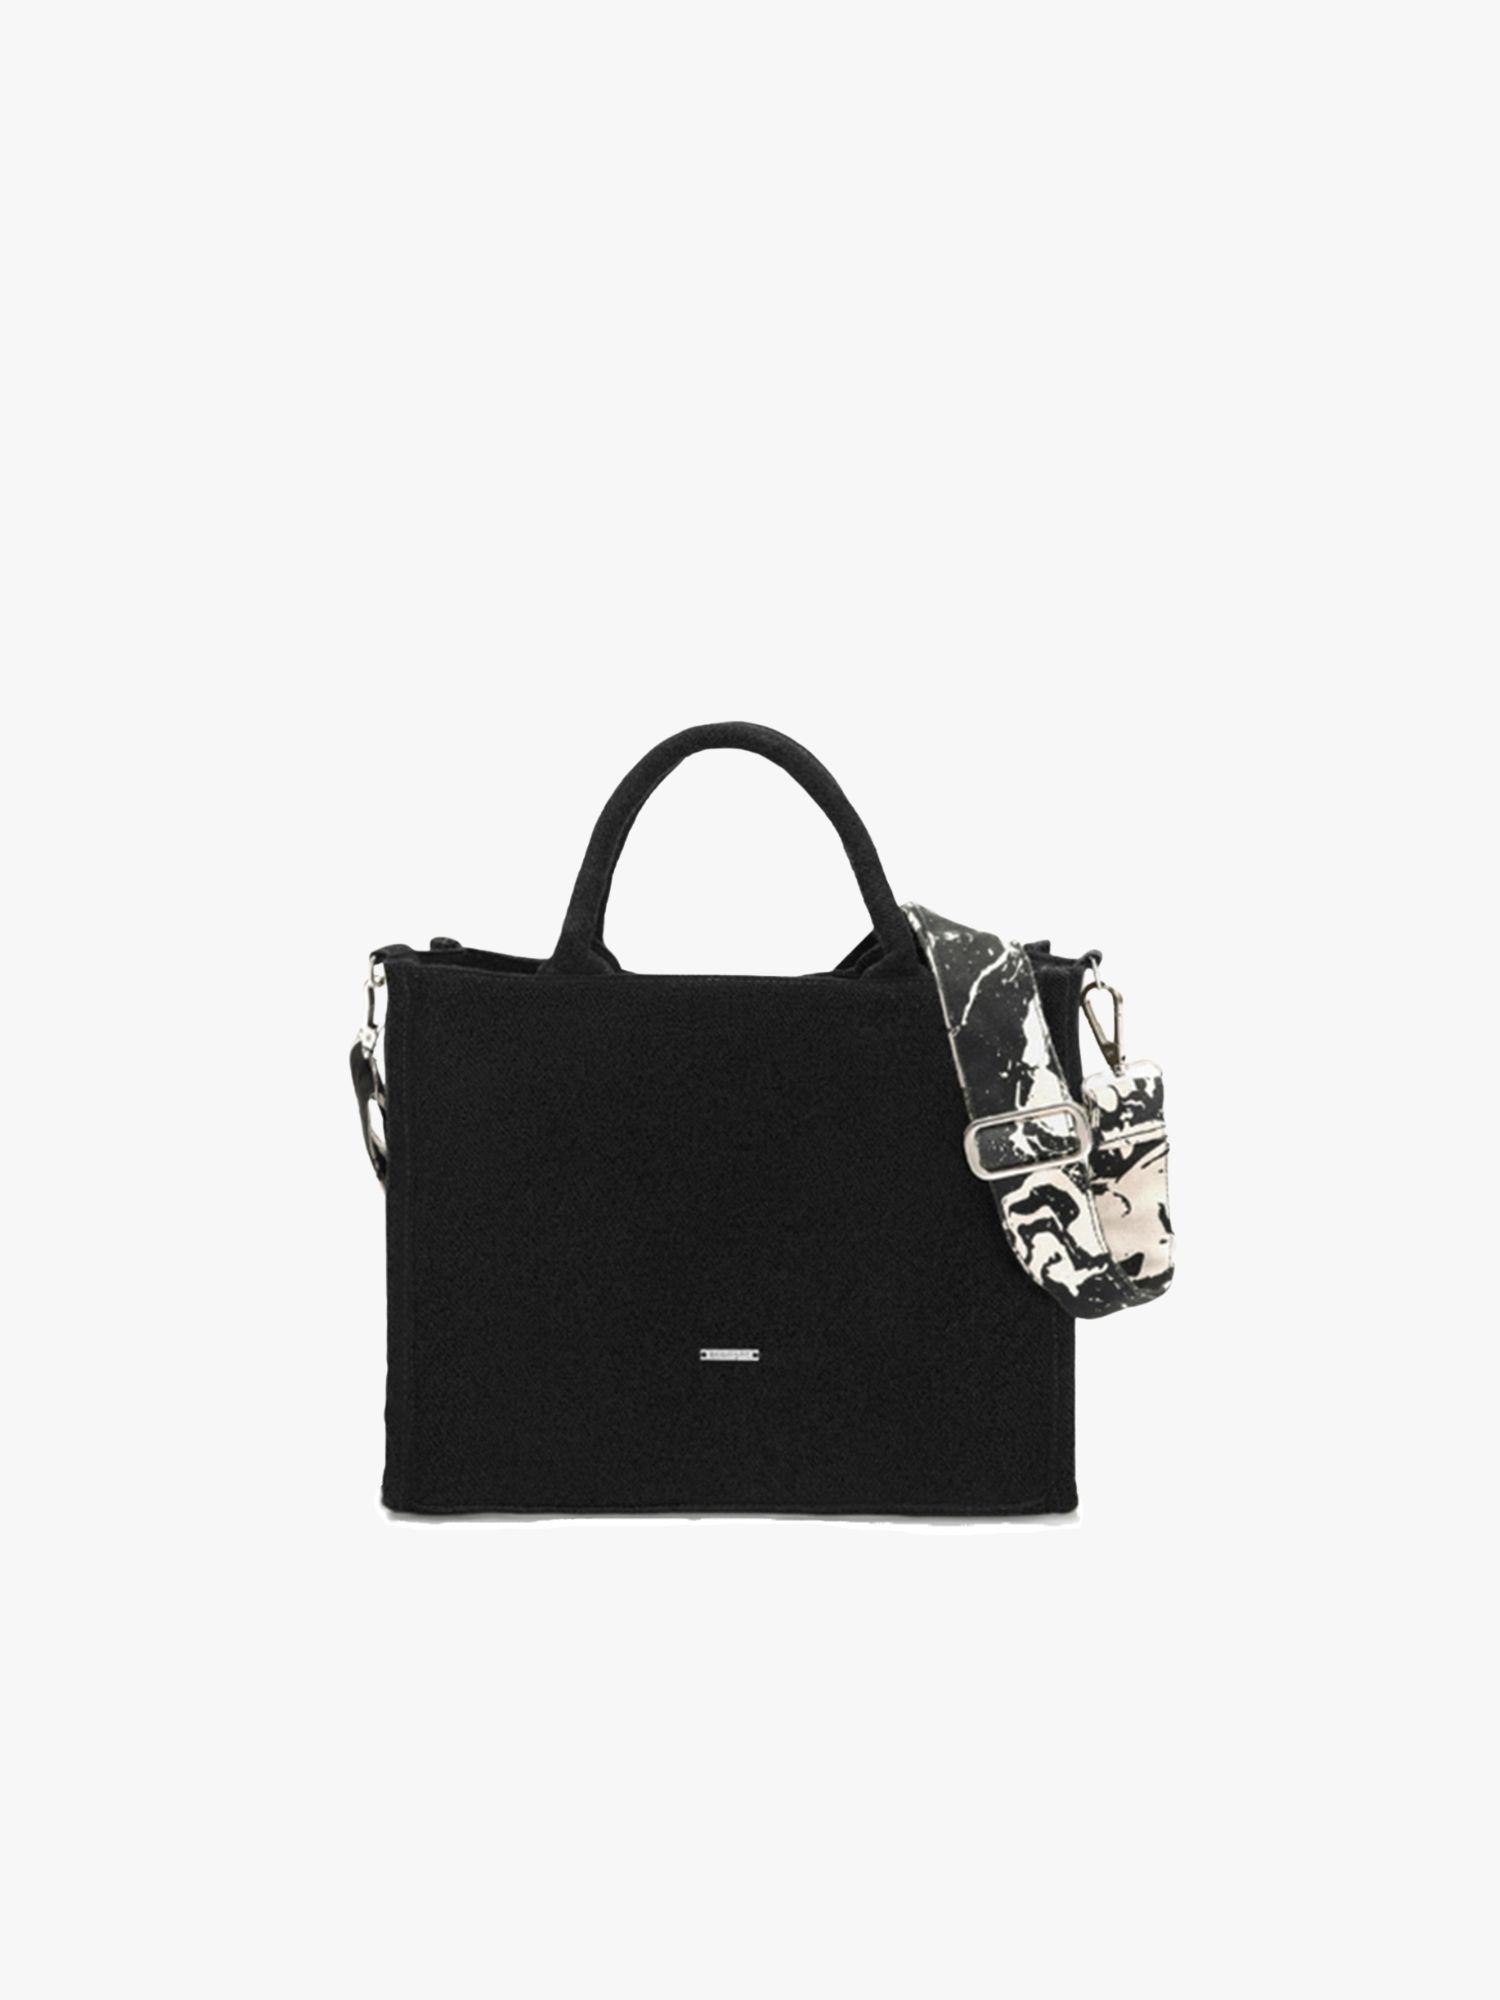 black solid satchel handbag